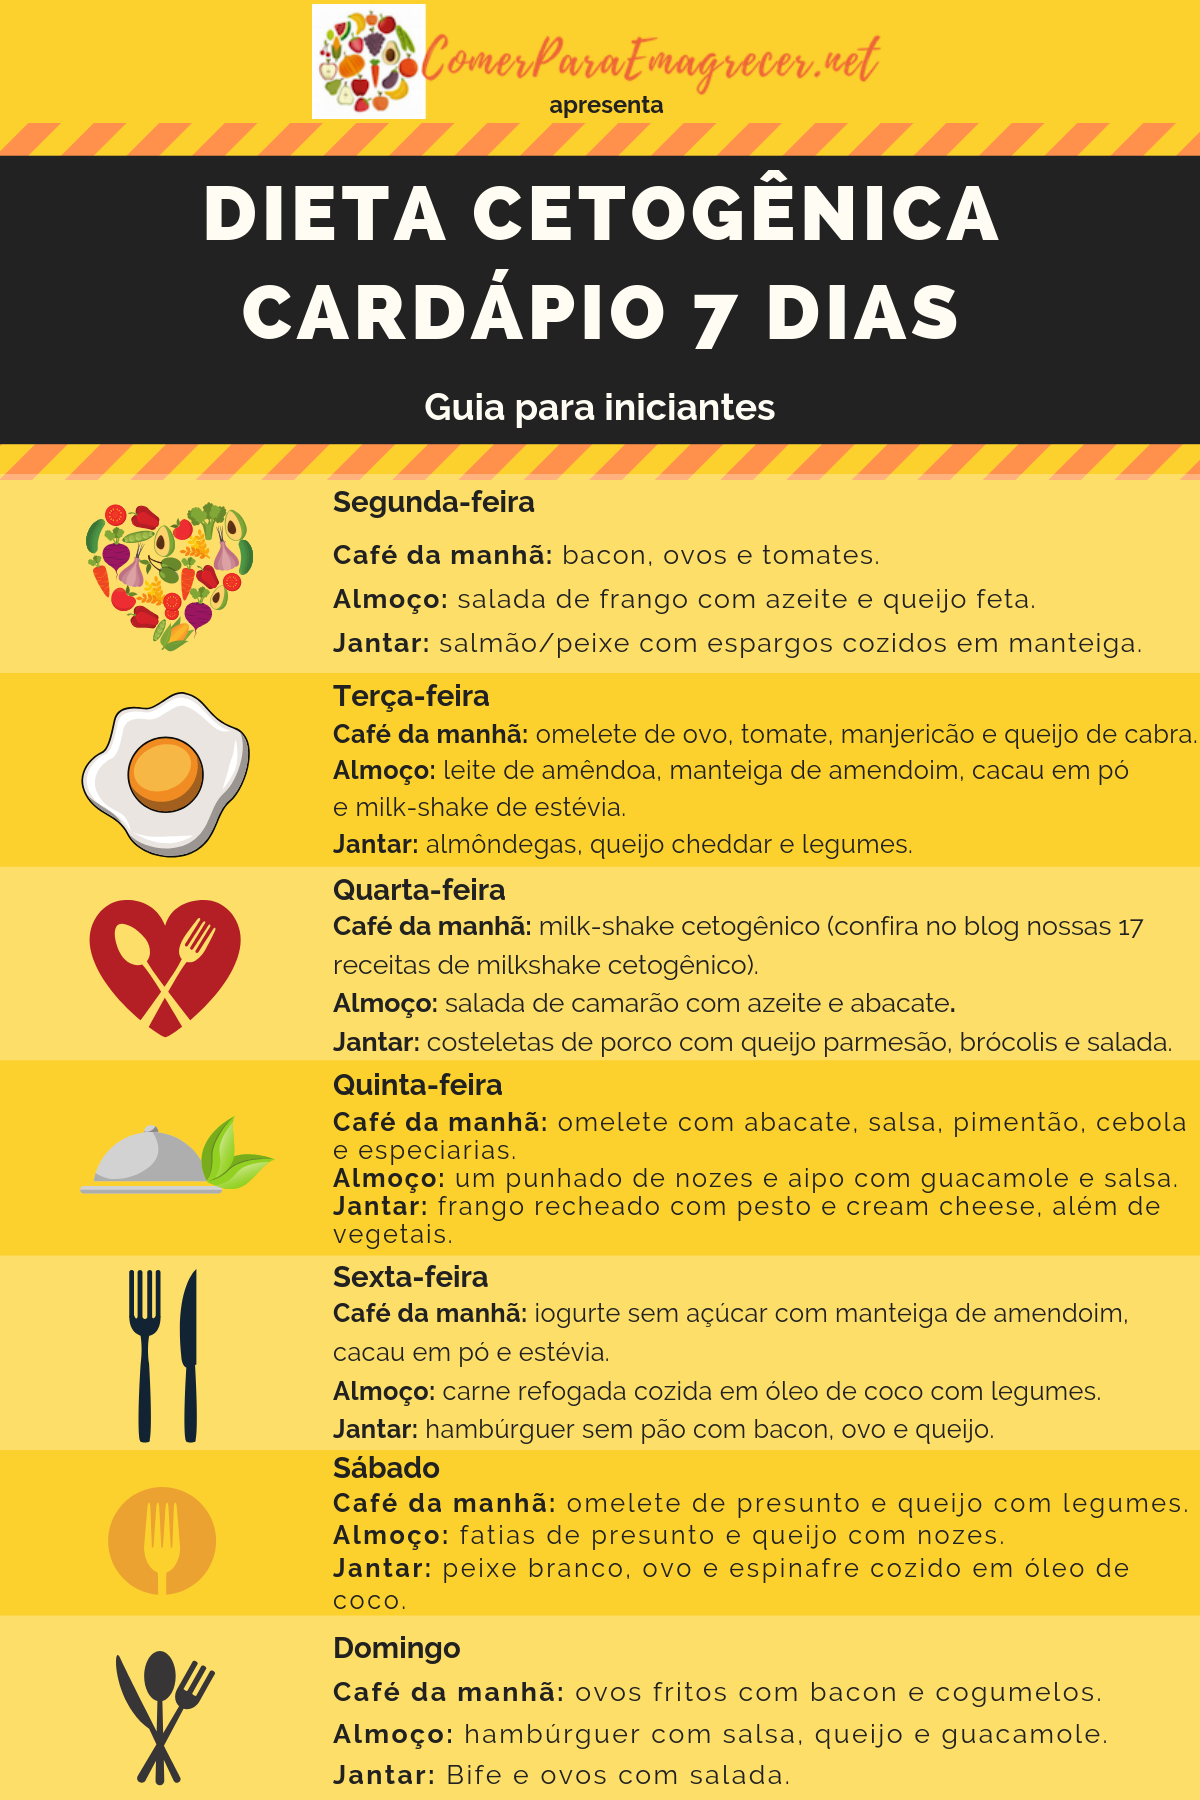 dieta cetogenica cardapio semanal - dieta cetogênica cardápio 7 dias